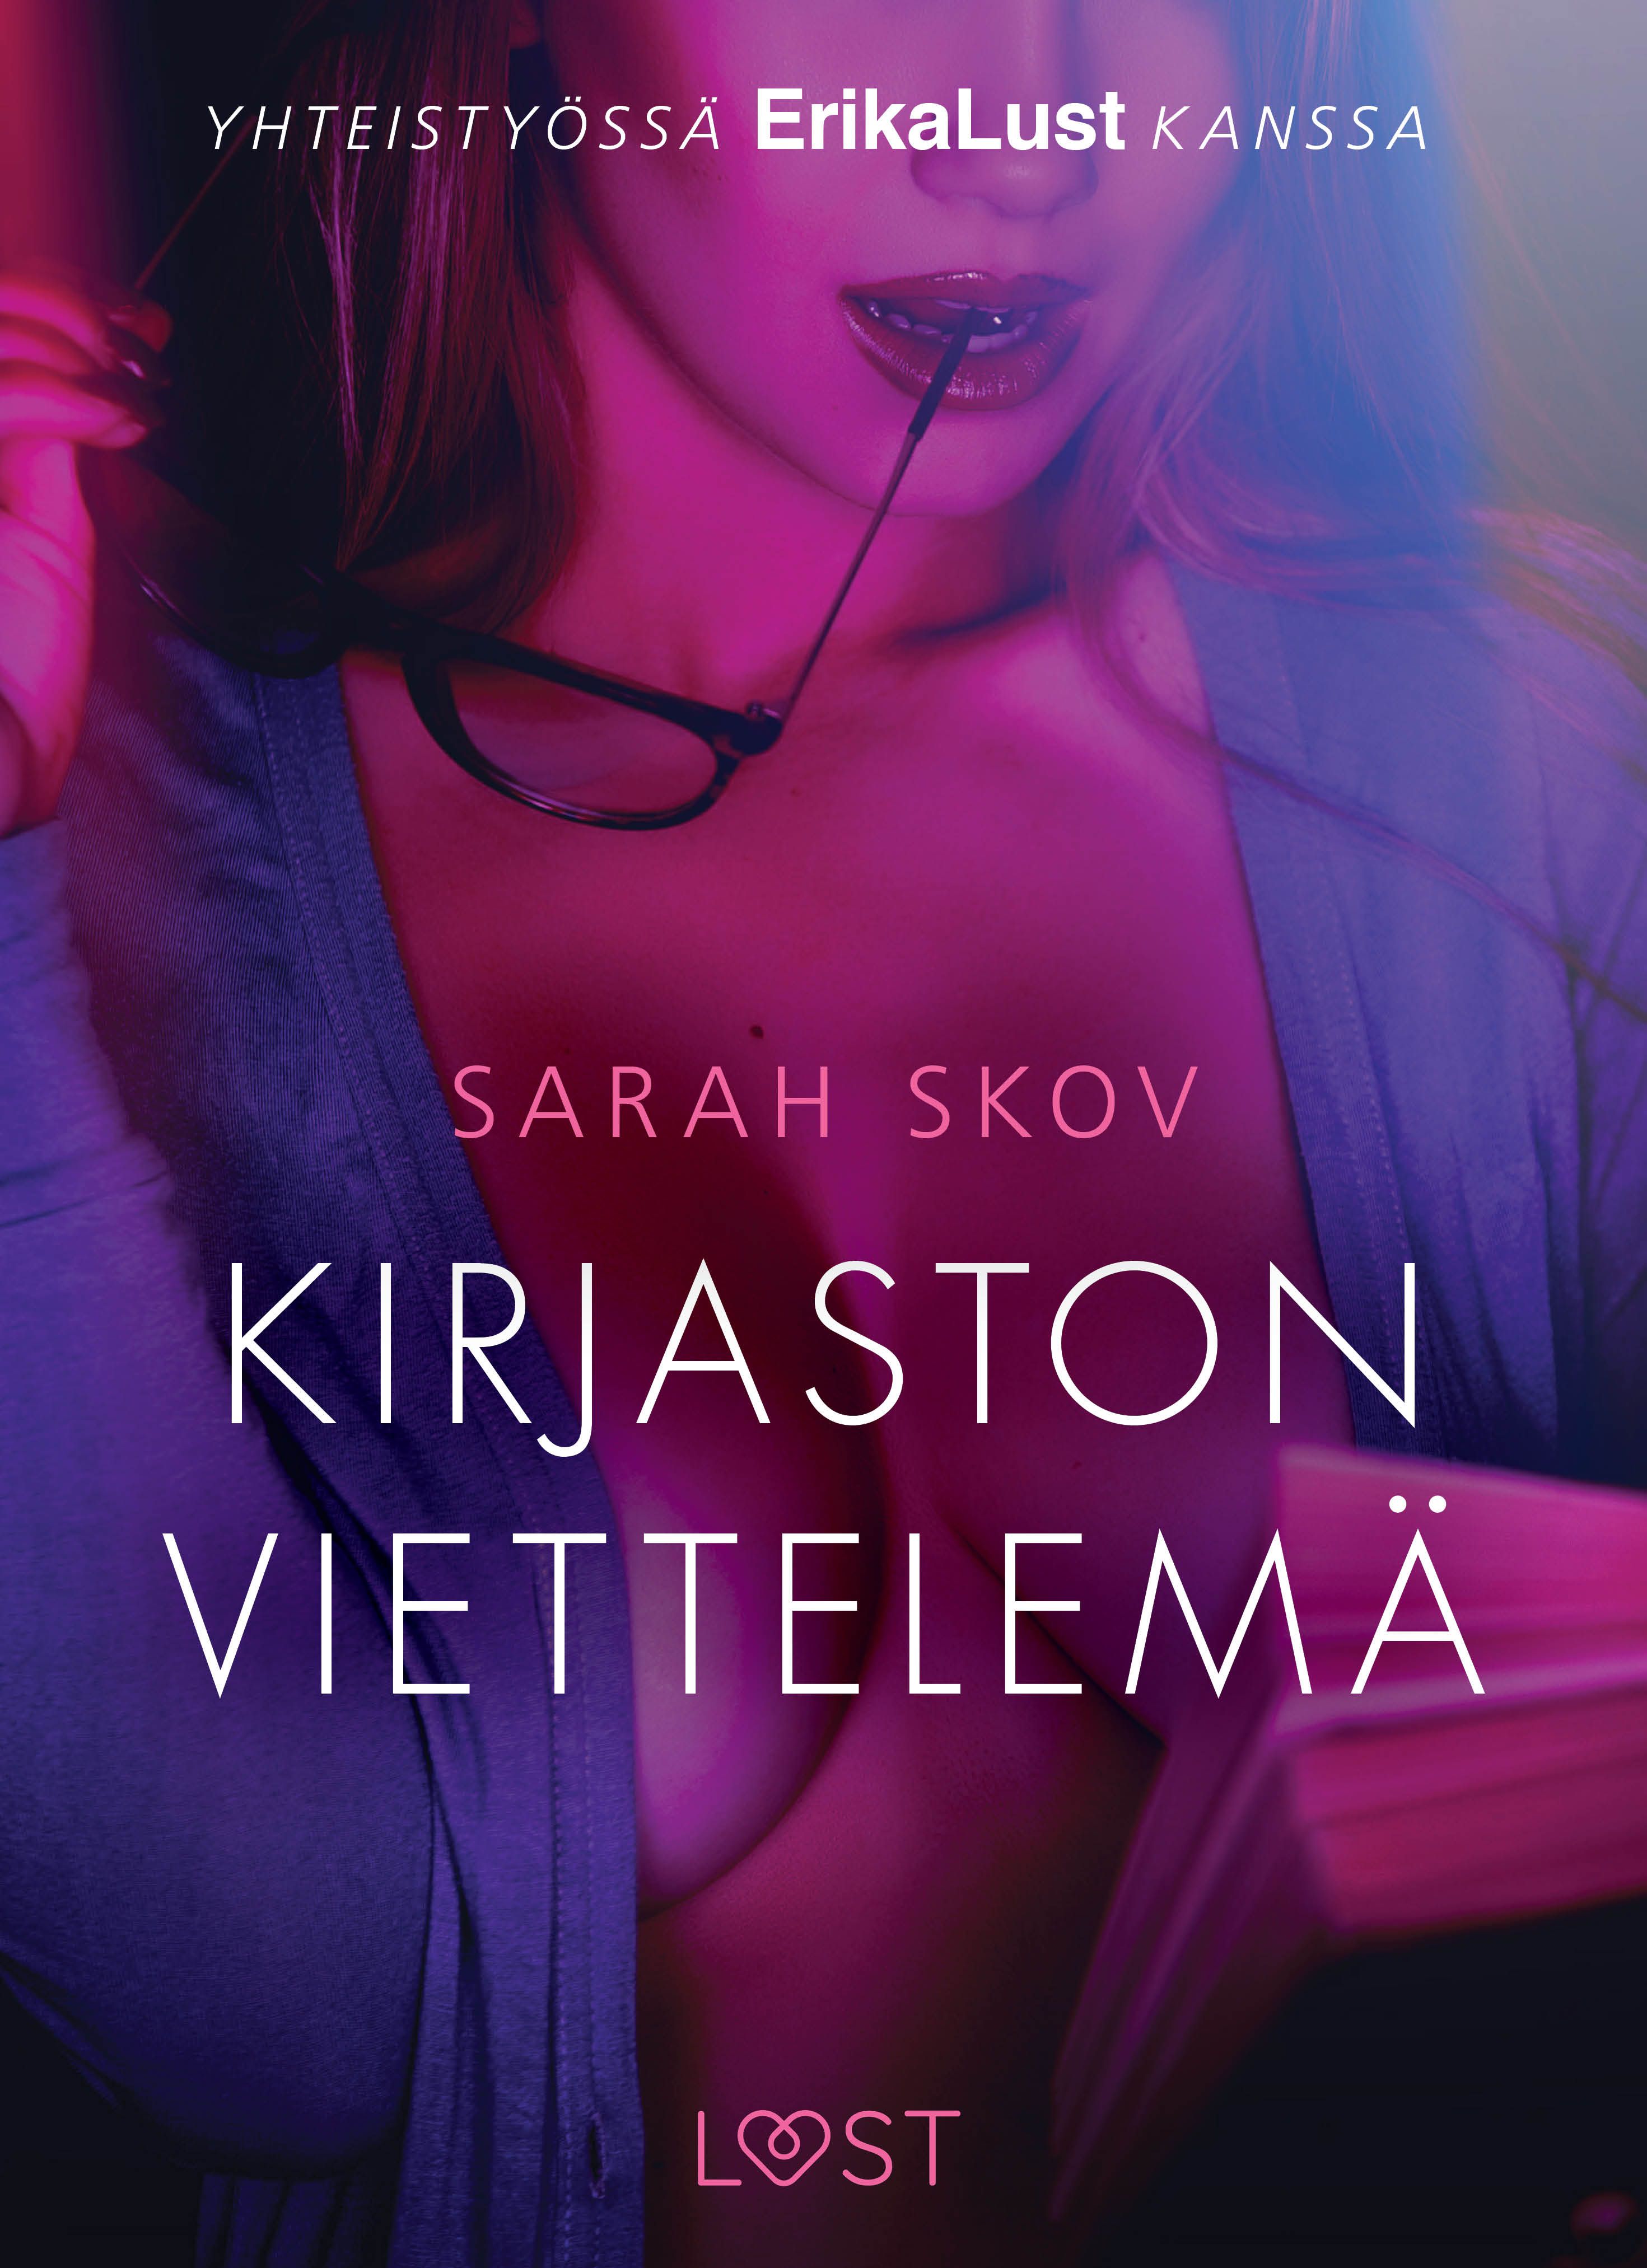 Kirjaston viettelemä - eroottinen novelli, e-bok av Sarah Skov